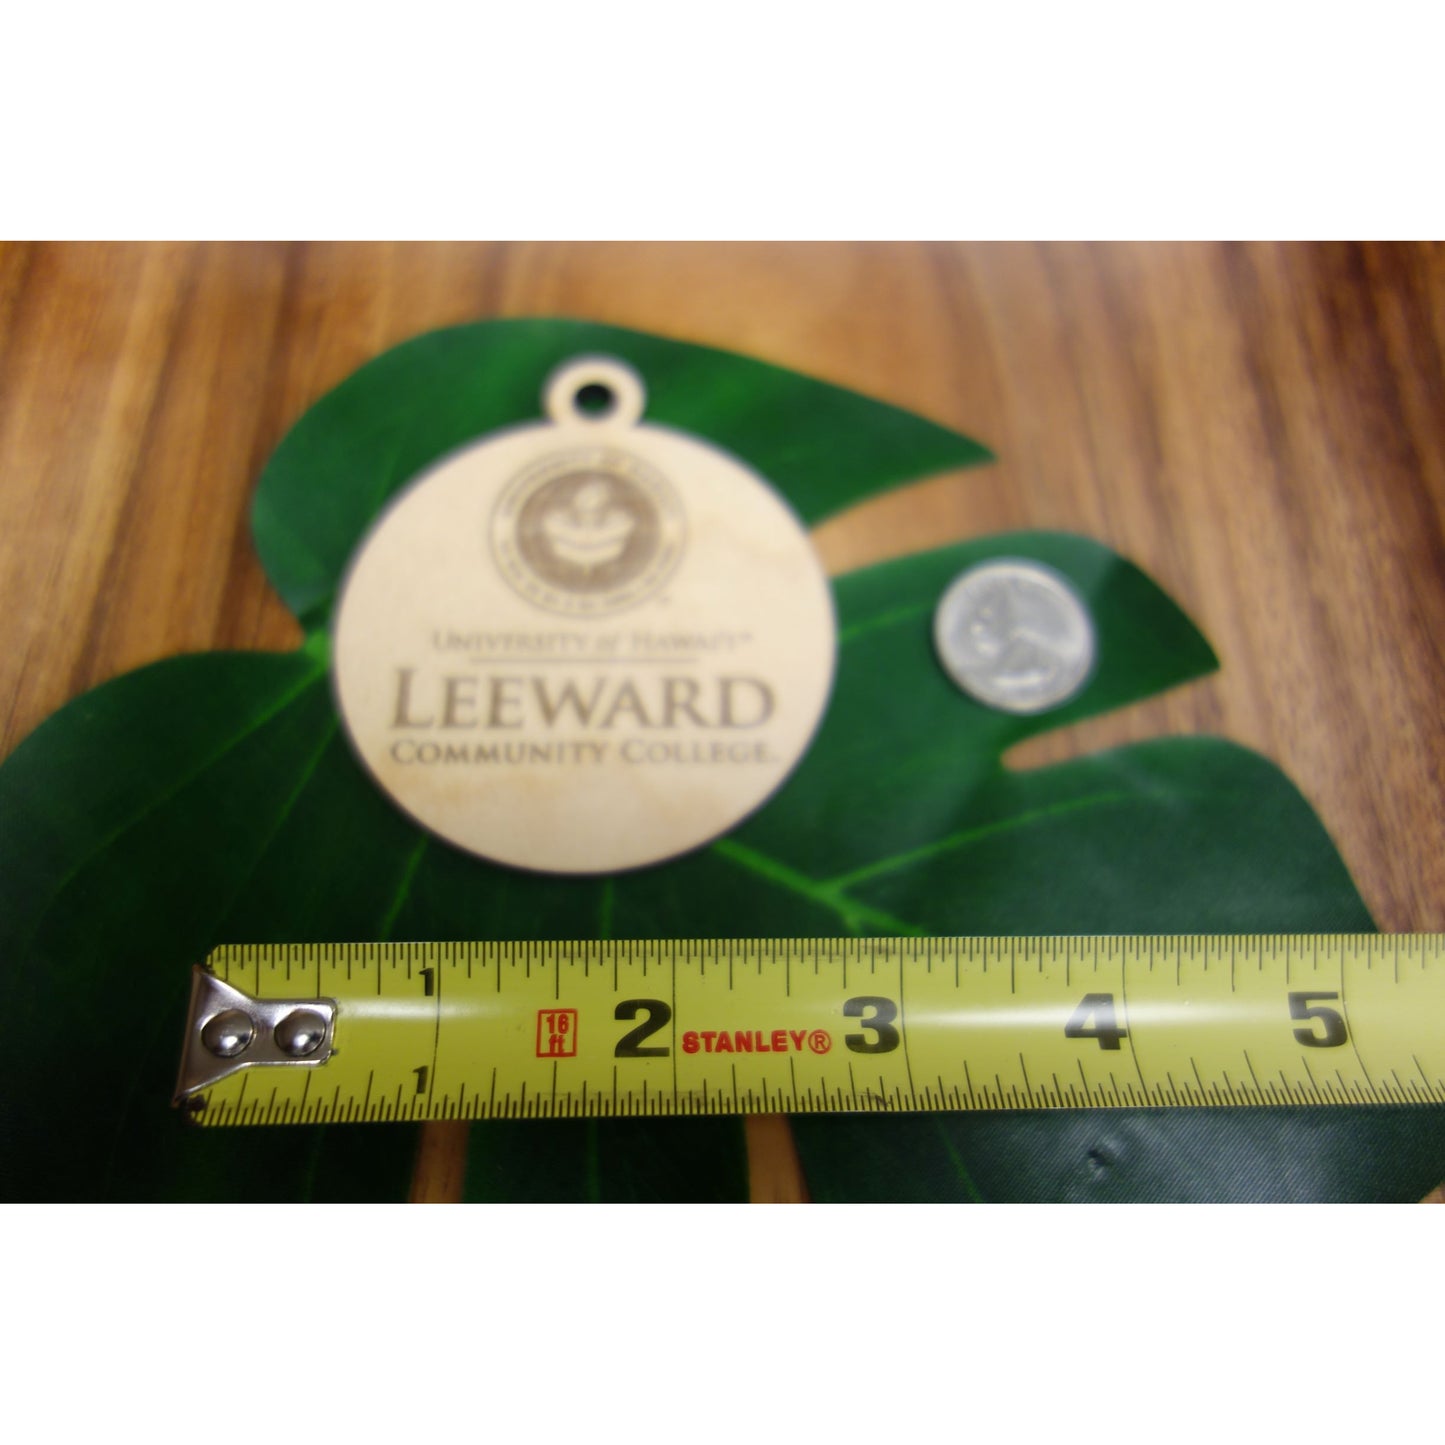 Officially Licensed University of Hawaii Leeward Community College Keepsake Ornament